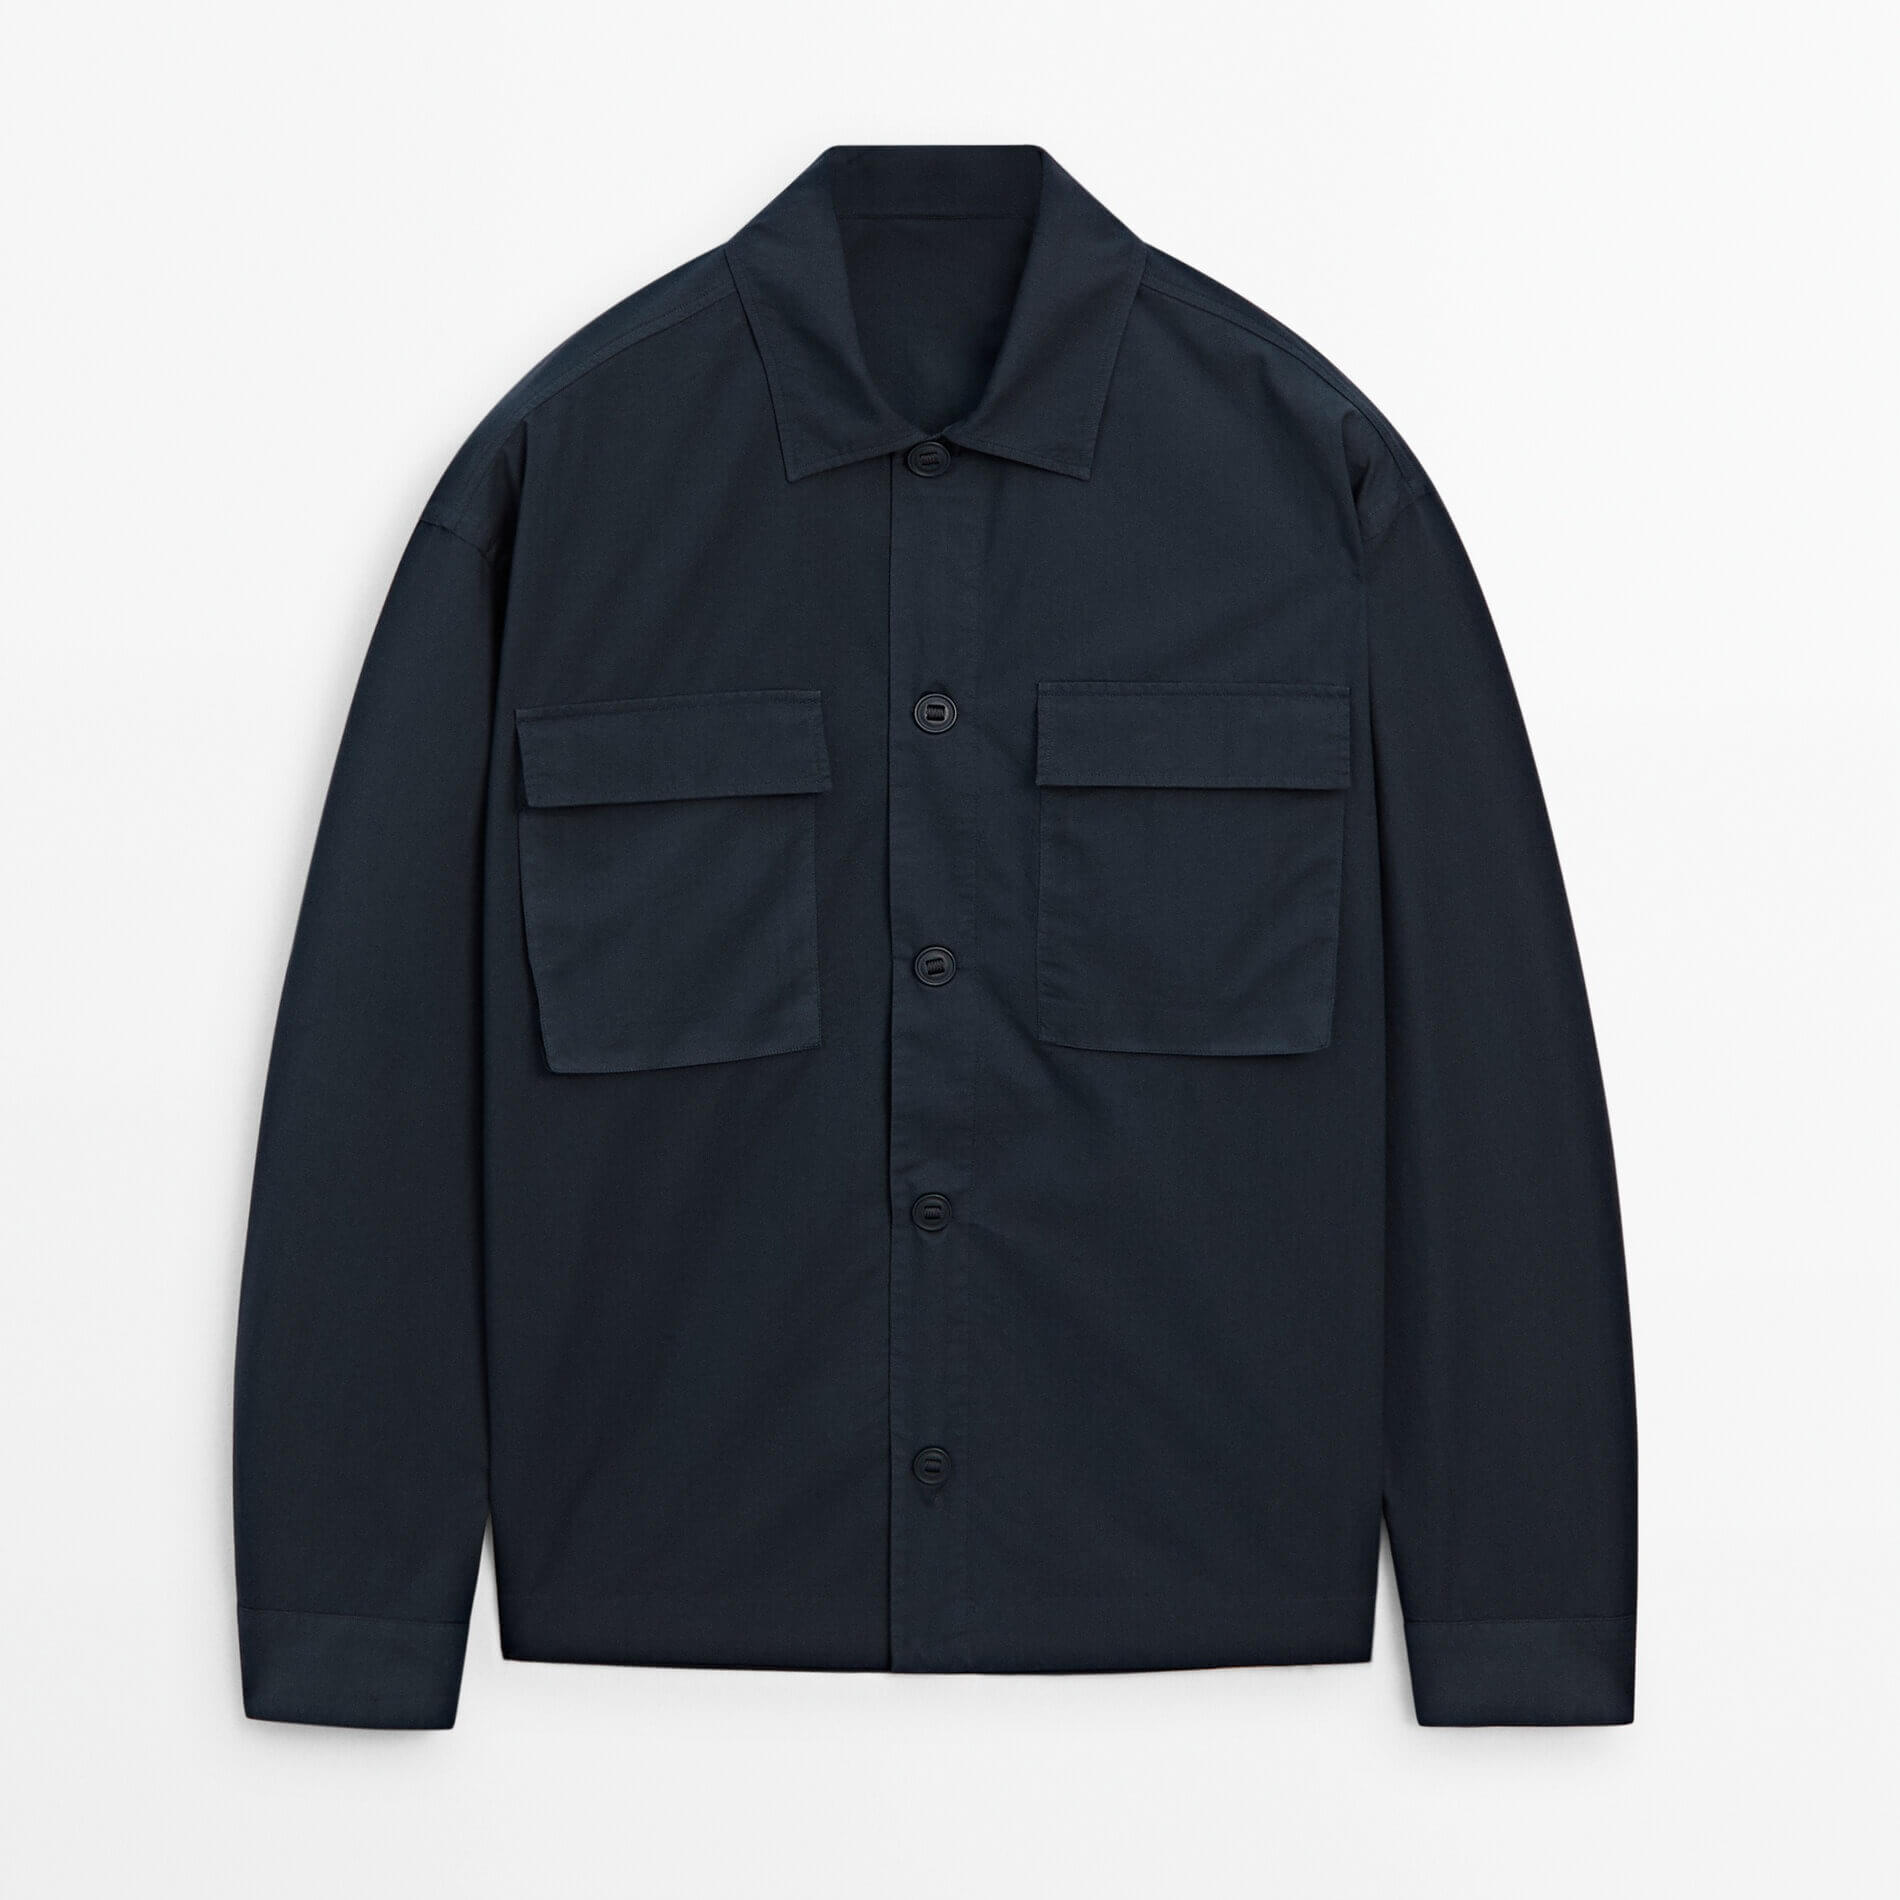 Куртка-рубашка Massimo Dutti Cotton With Chest Pockets, темно-синий куртка massimo dutti double breasted with zip pockets темно синий